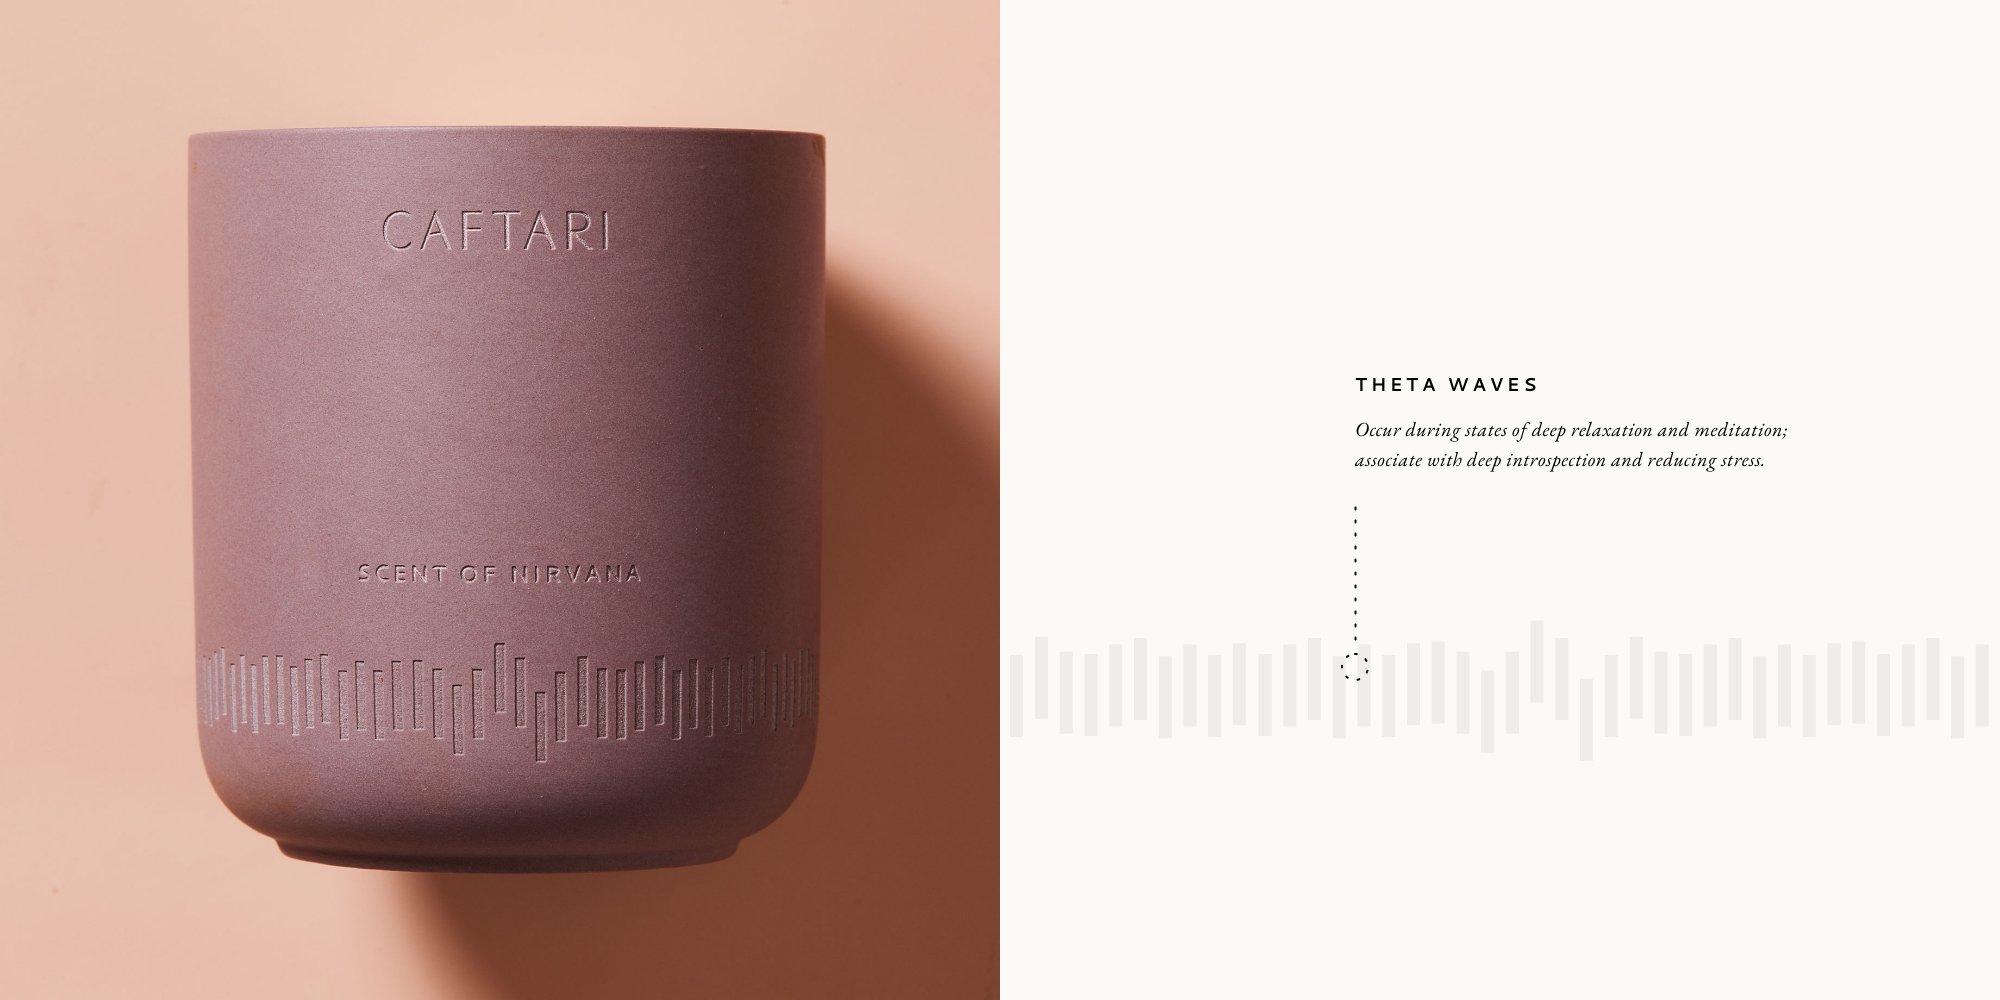 caftari-brand-packaging-design-candle-engraved-nirvana.jpg